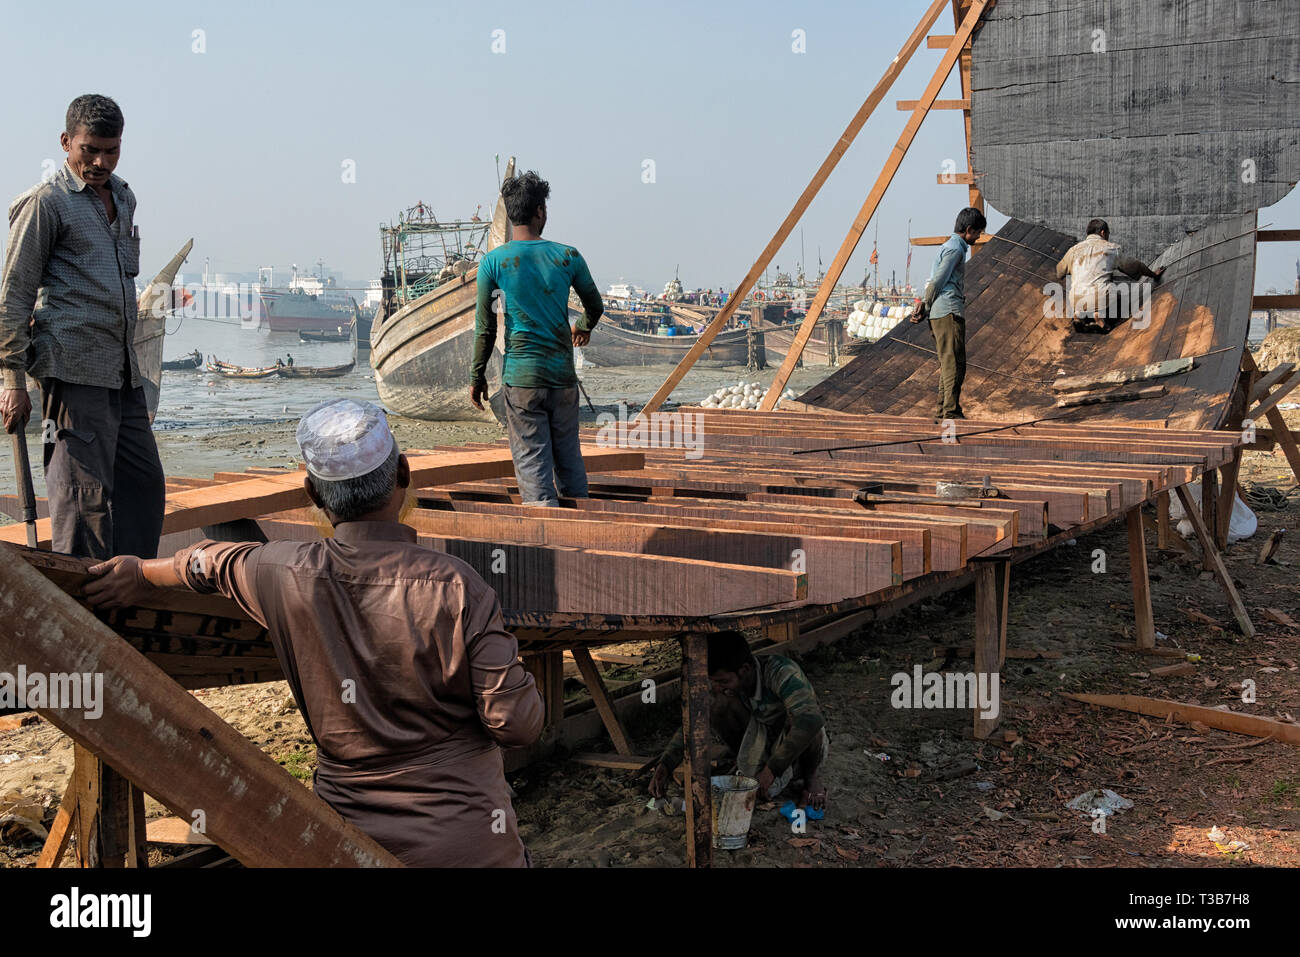 Building a fishing boat in the harbor, Chittagong, Chittagong Division, Bangladesh Stock Photo